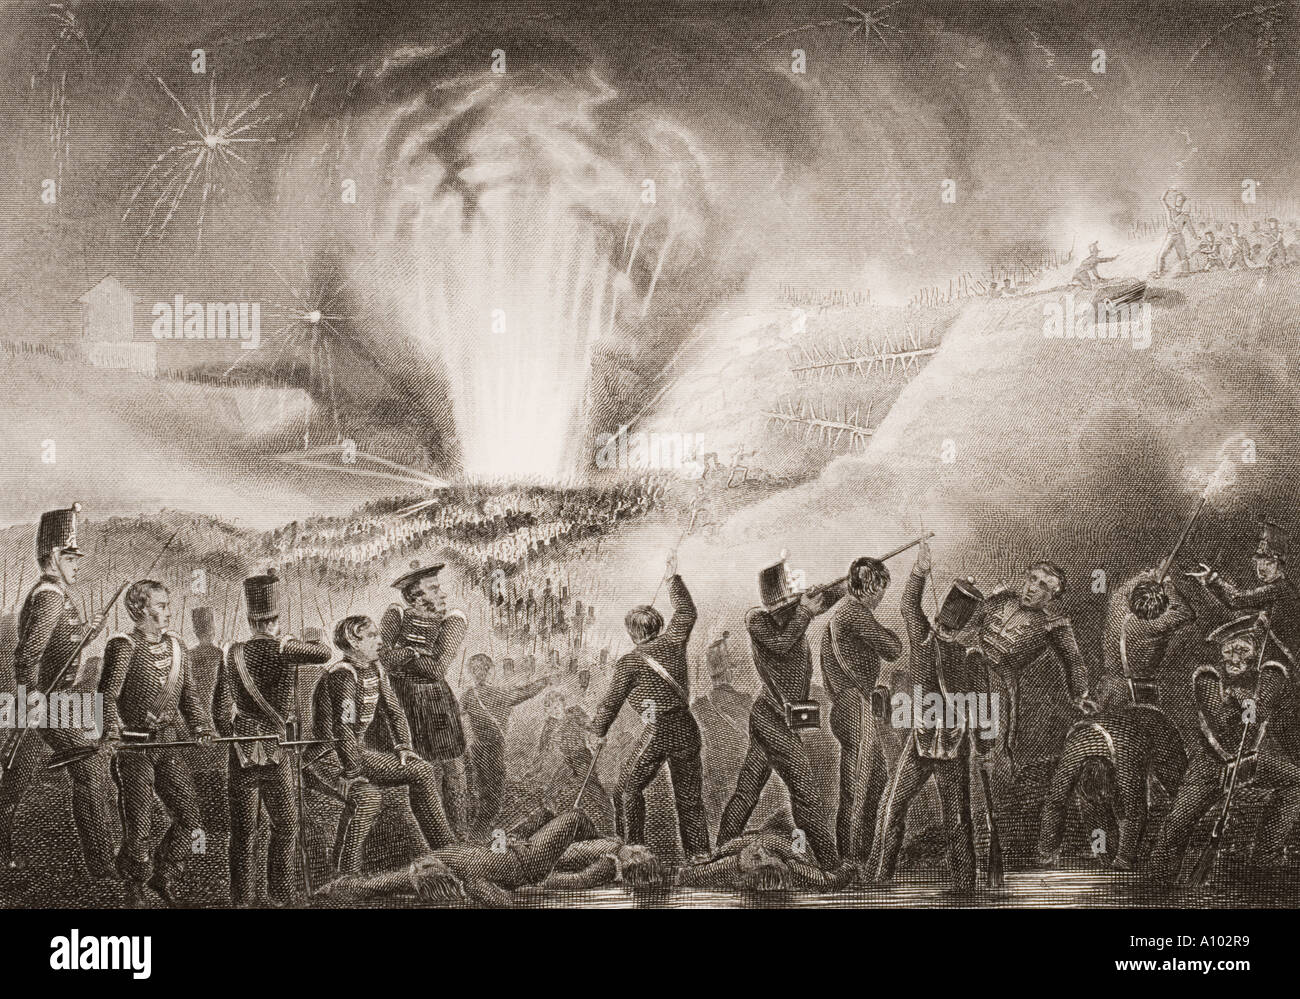 Storming of Badajoz, Spain, 1812, during the Peninsular War. Stock Photo